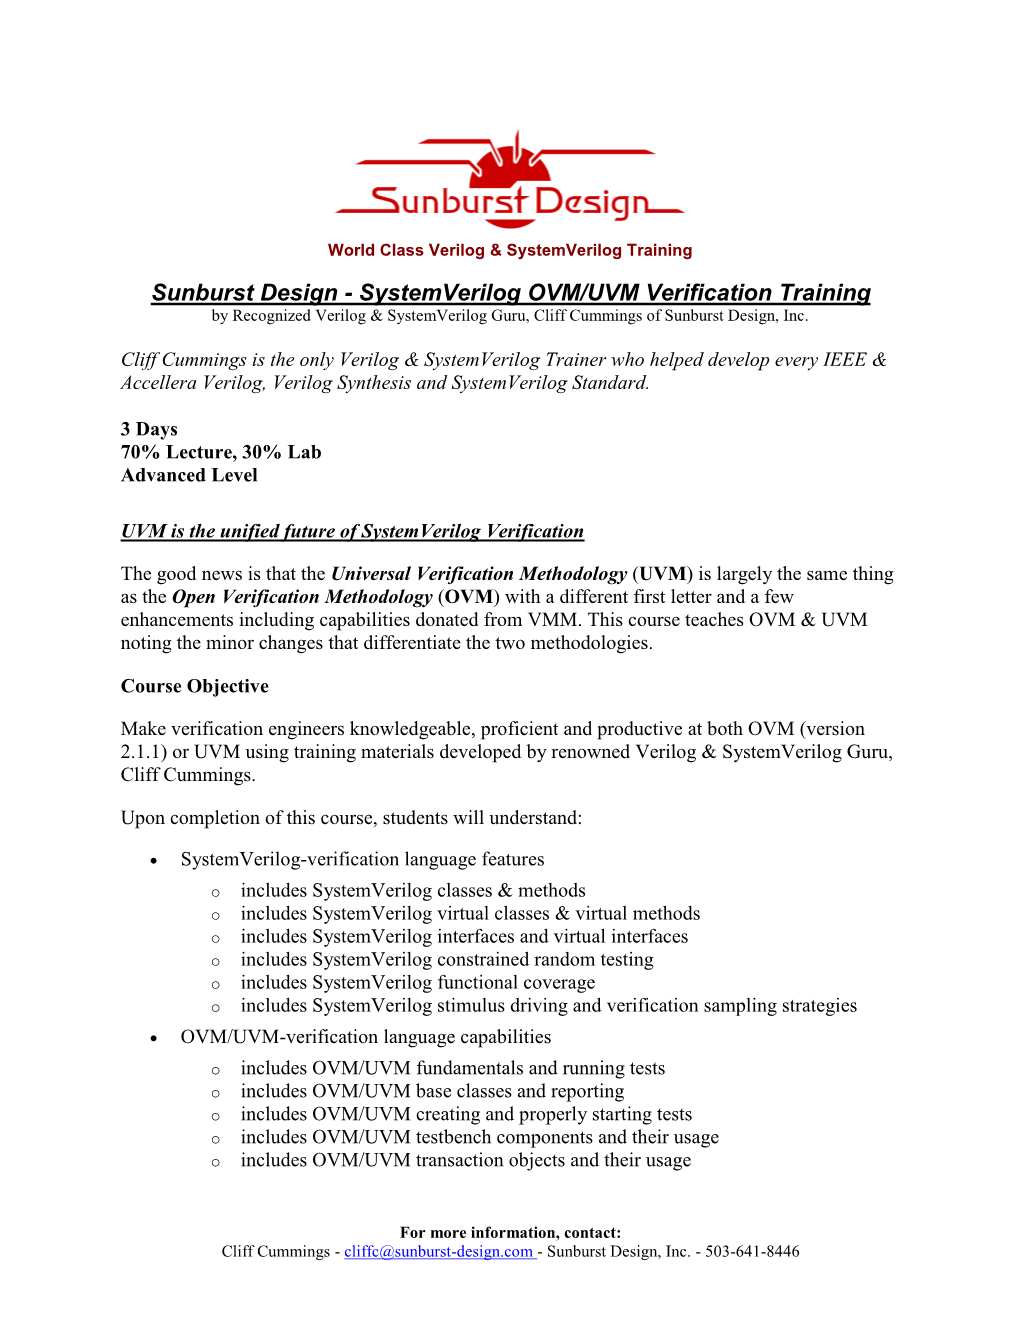 Systemverilog OVM/UVM Verification Training by Recognized Verilog & Systemverilog Guru, Cliff Cummings of Sunburst Design, Inc